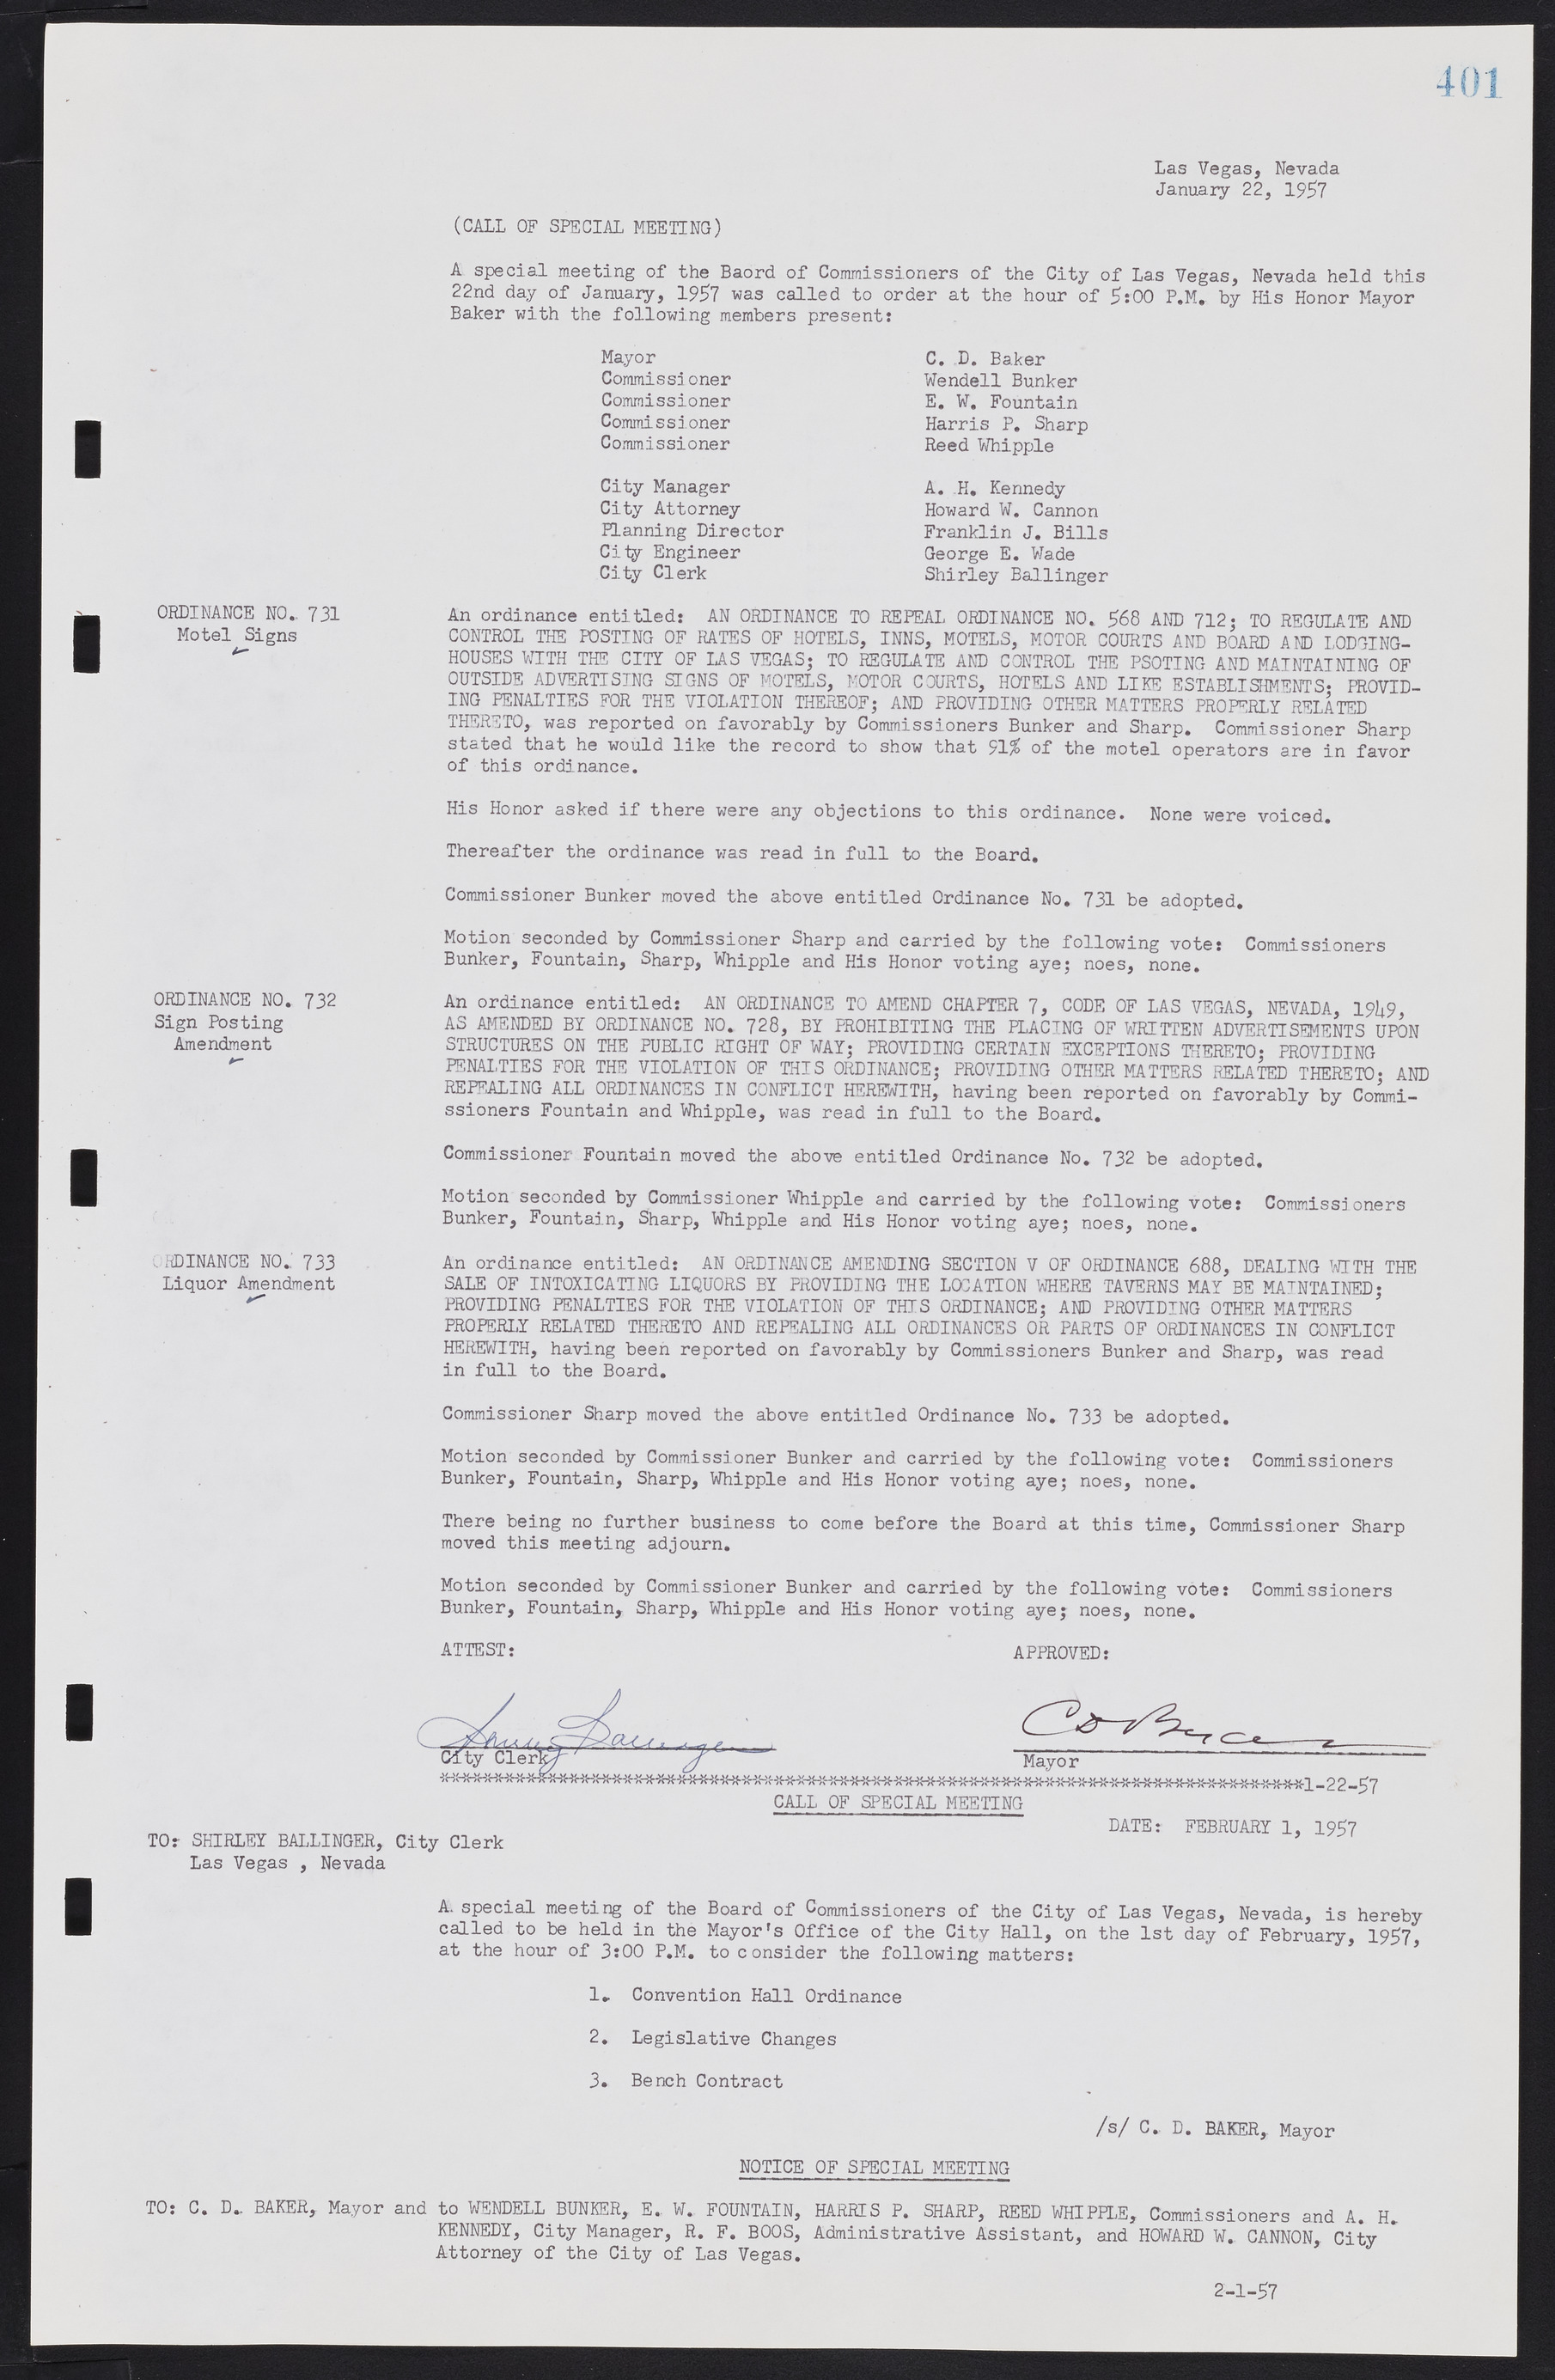 Las Vegas City Commission Minutes, September 21, 1955 to November 20, 1957, lvc000010-421